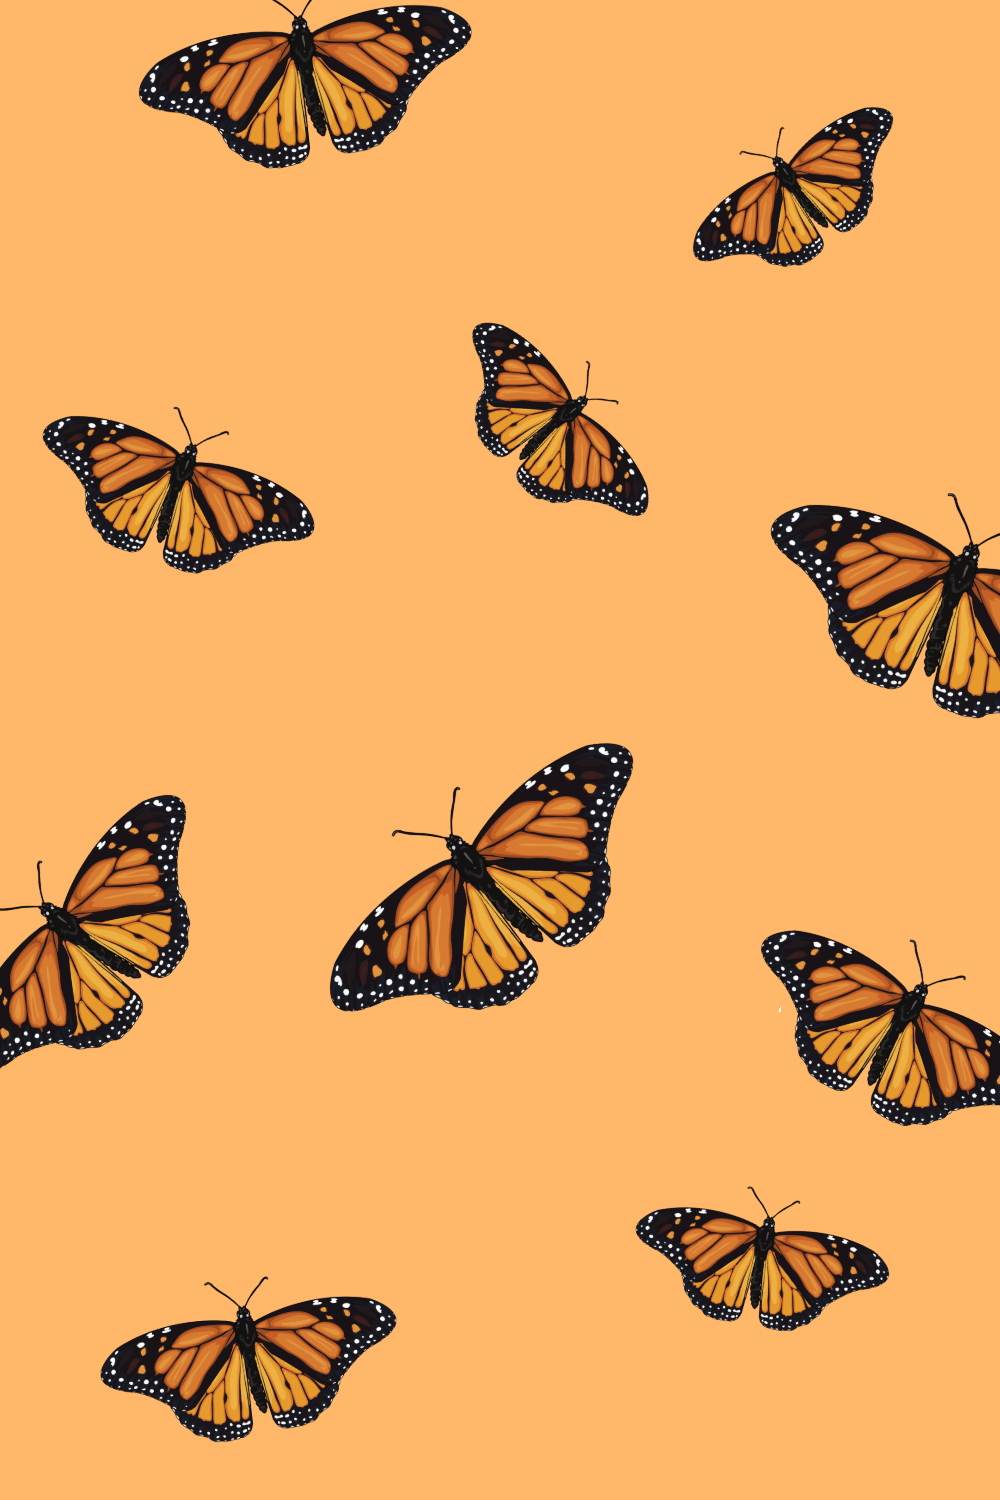 Butterfly wallpaper. iPhone wallpaper vintage, Butterfly wallpaper, Butterfly wallpaper iphone